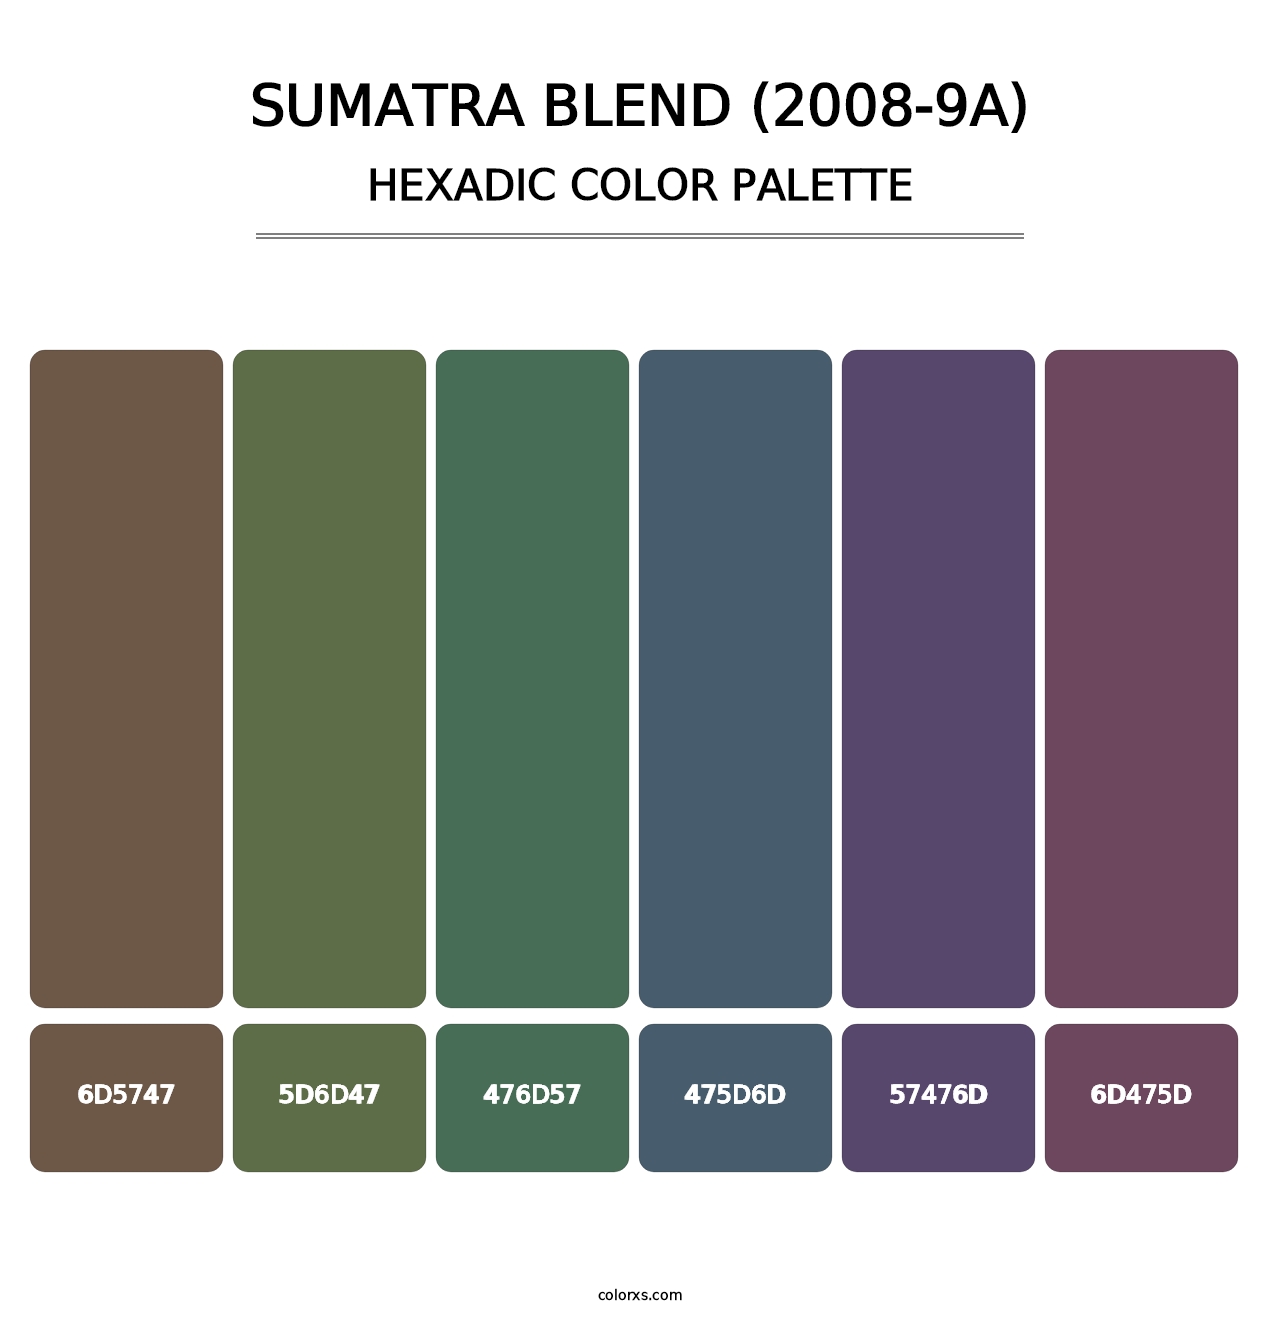 Sumatra Blend (2008-9A) - Hexadic Color Palette